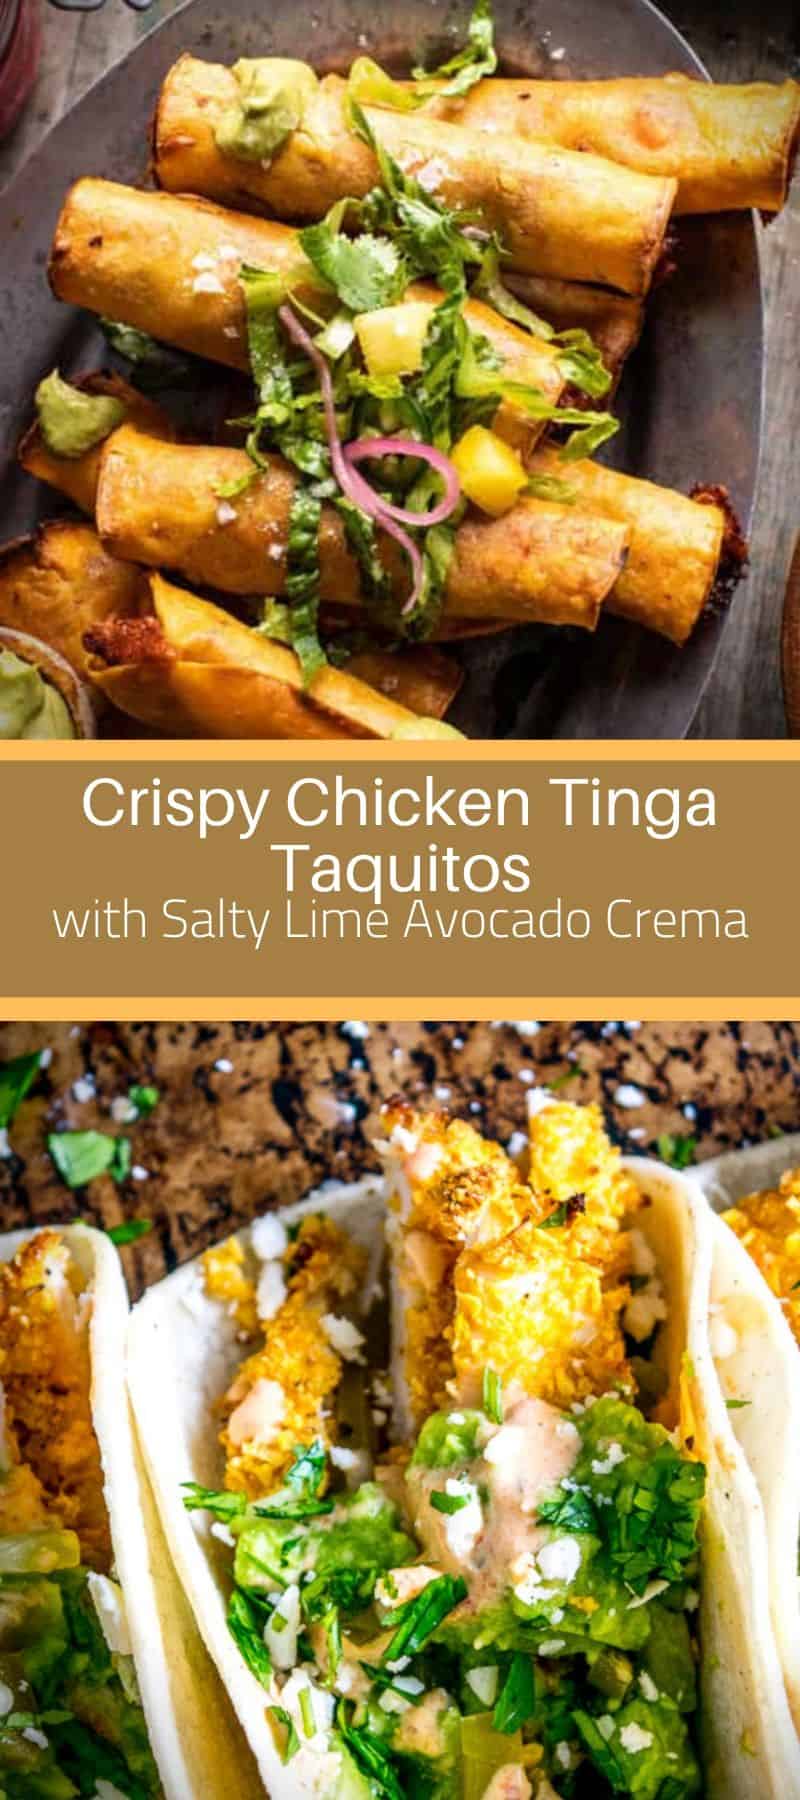 Crispy Chicken Tinga Taquitos with Salty Lime Avocado Crema 3